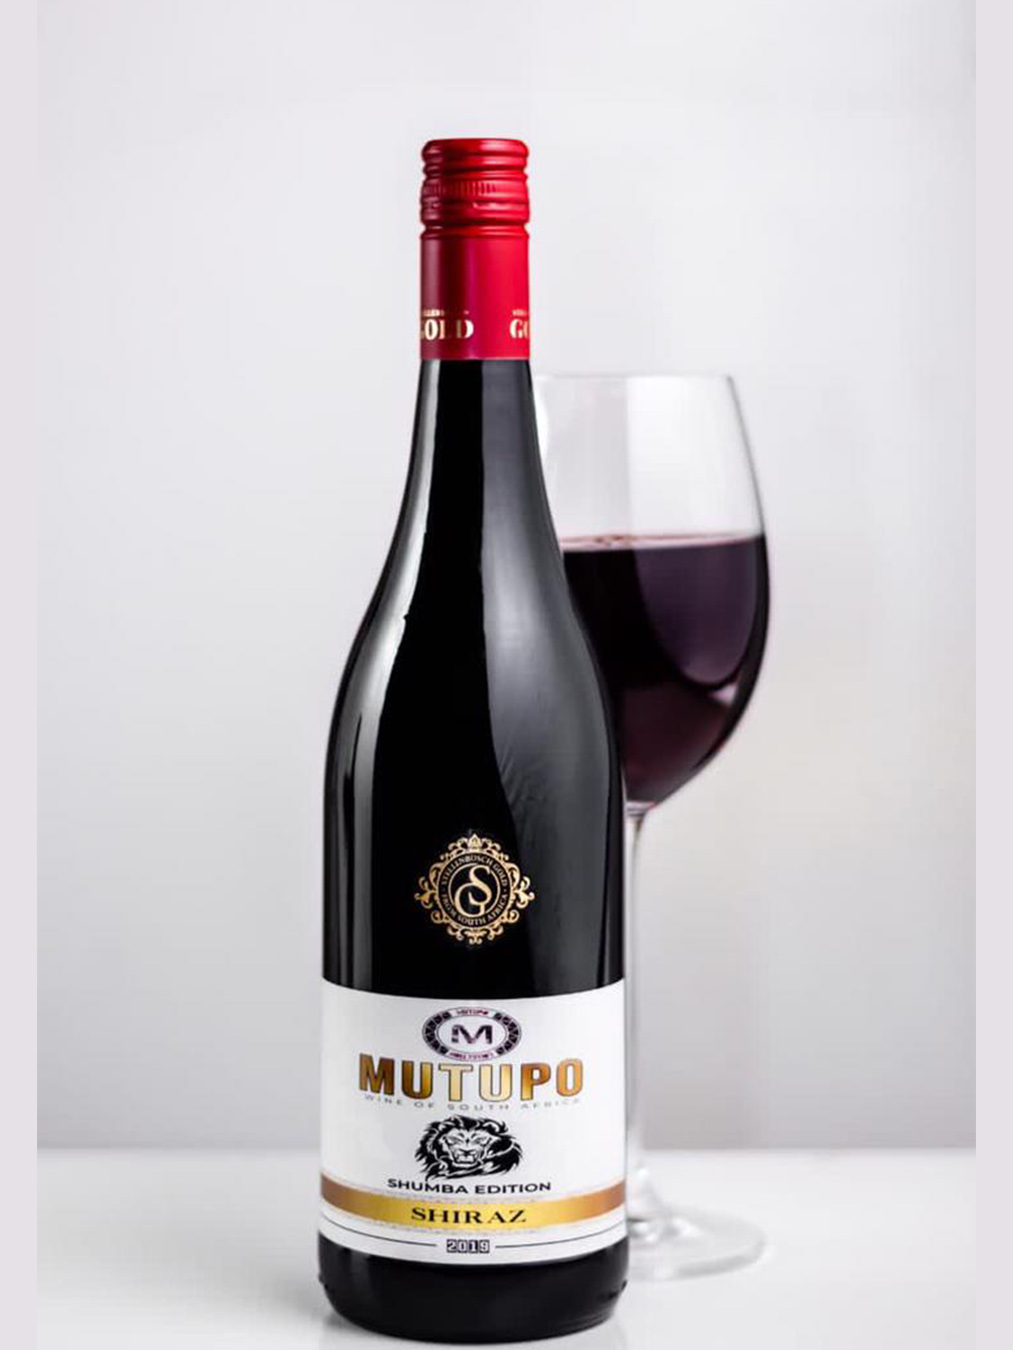 Mutupo Shiraz wine